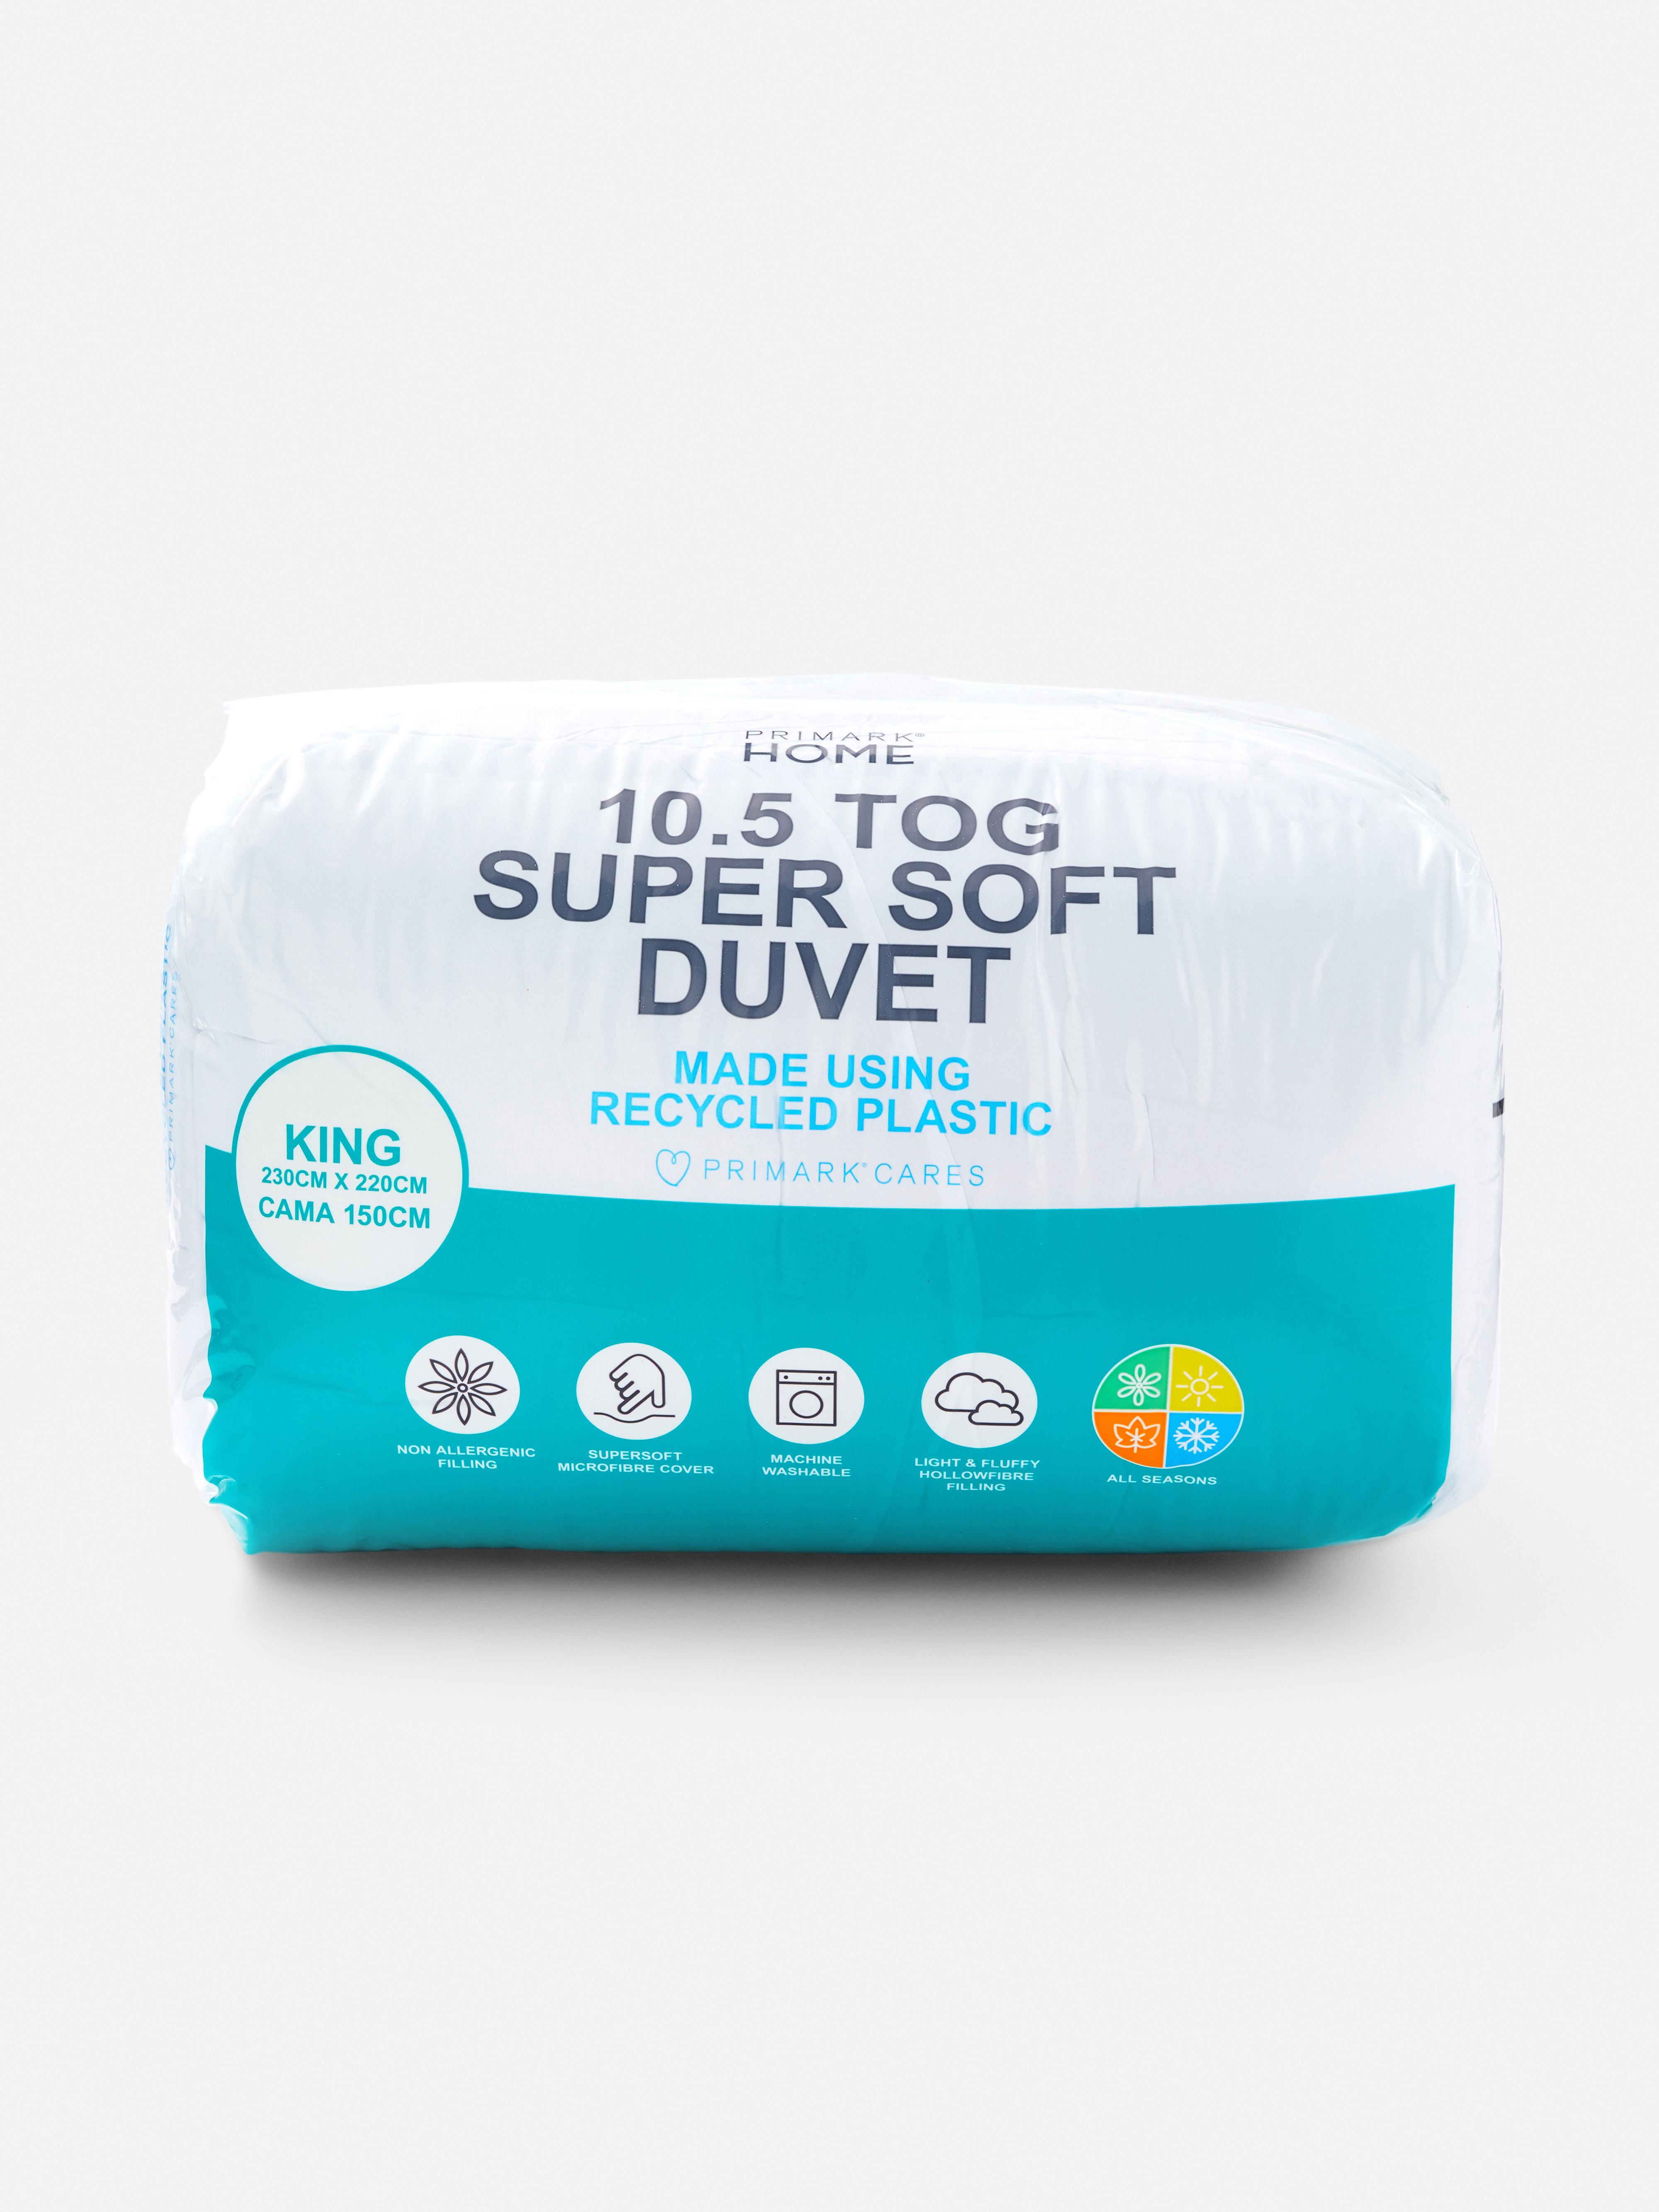 Super Soft 10.5 King Duvet